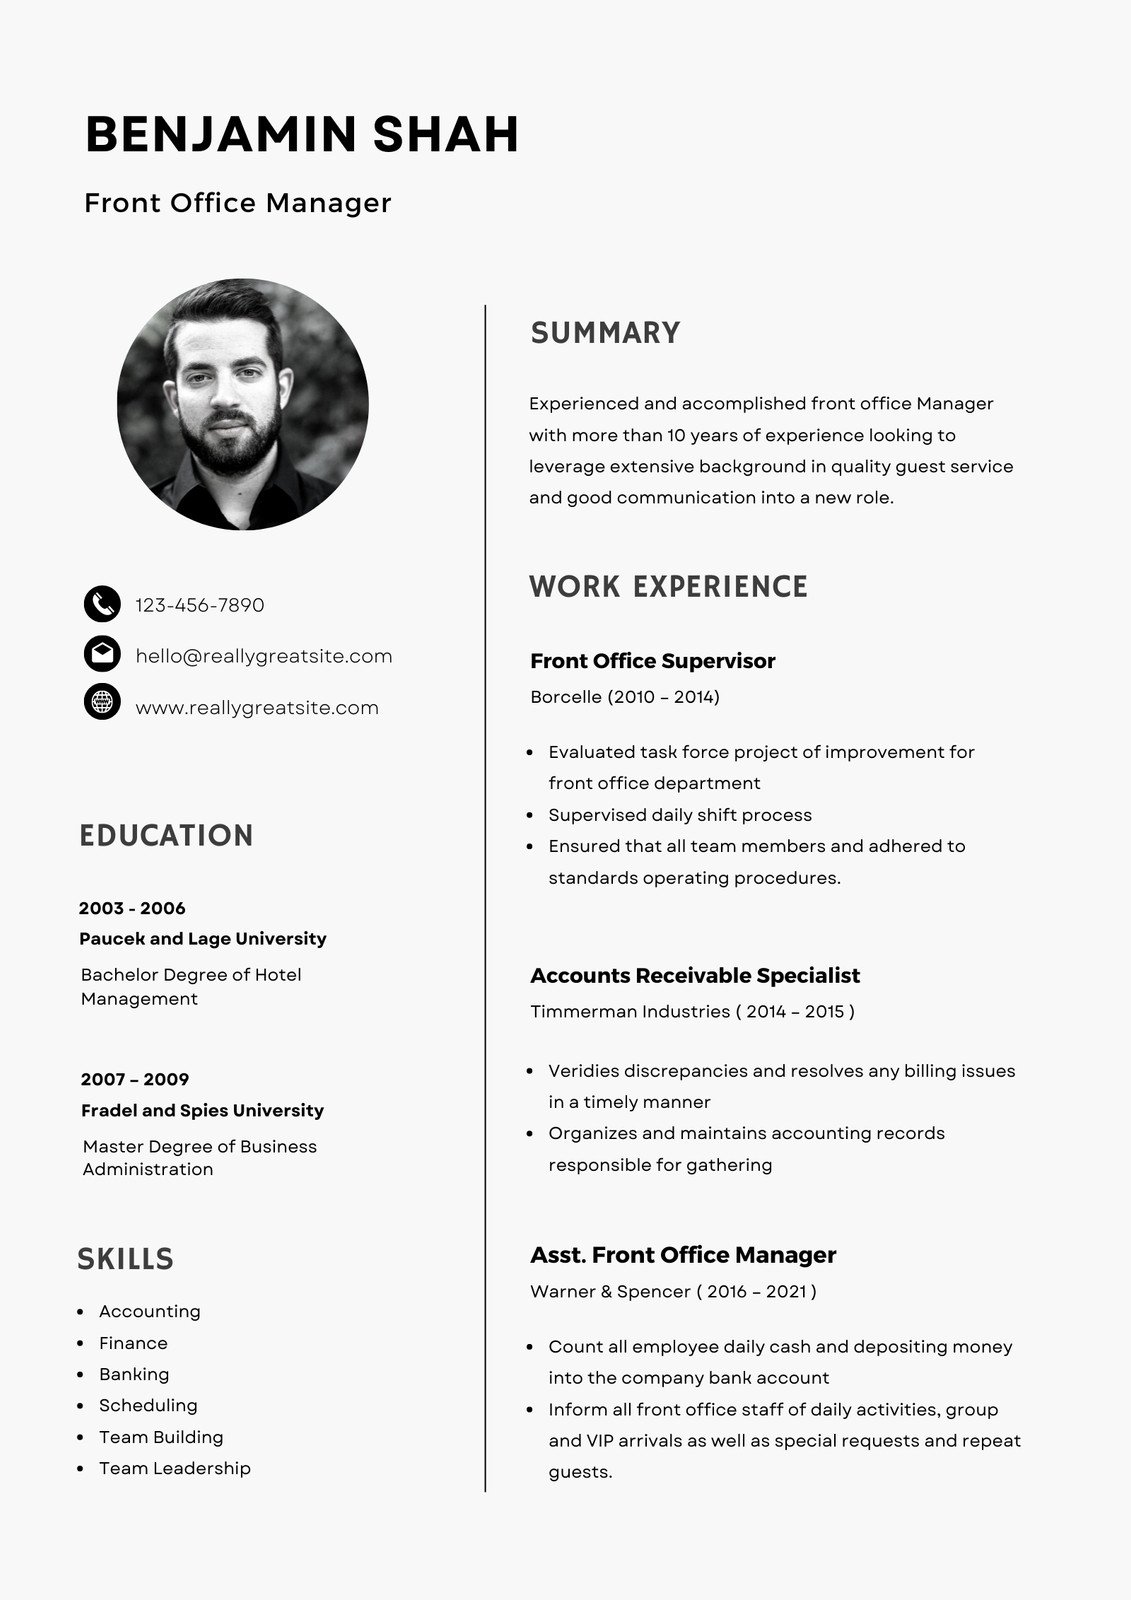 Free, printable, customizable creative resume templates | Canva